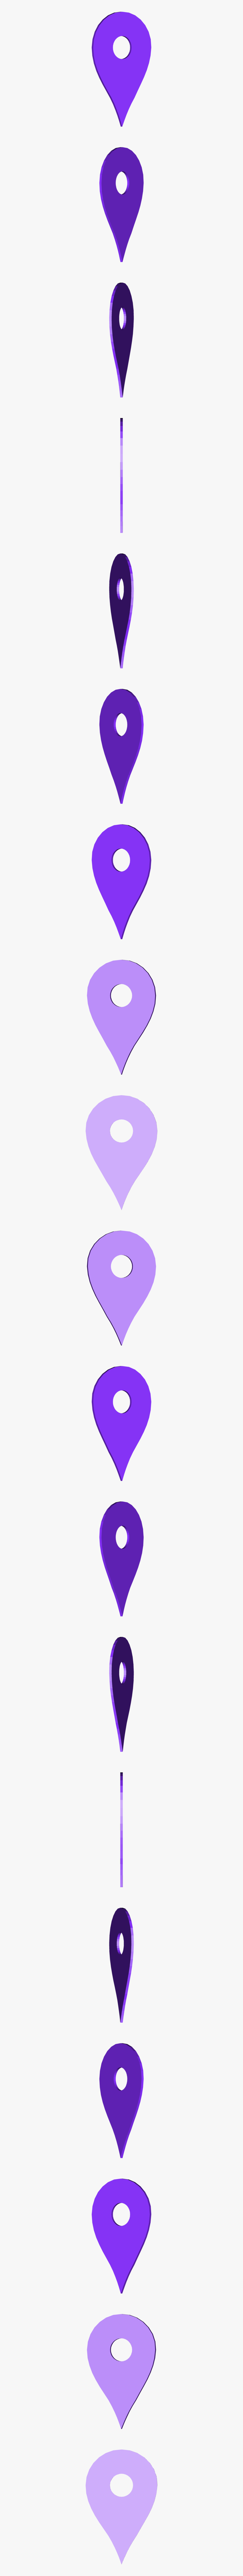 Google Map Pin Png, Transparent Png, Free Download